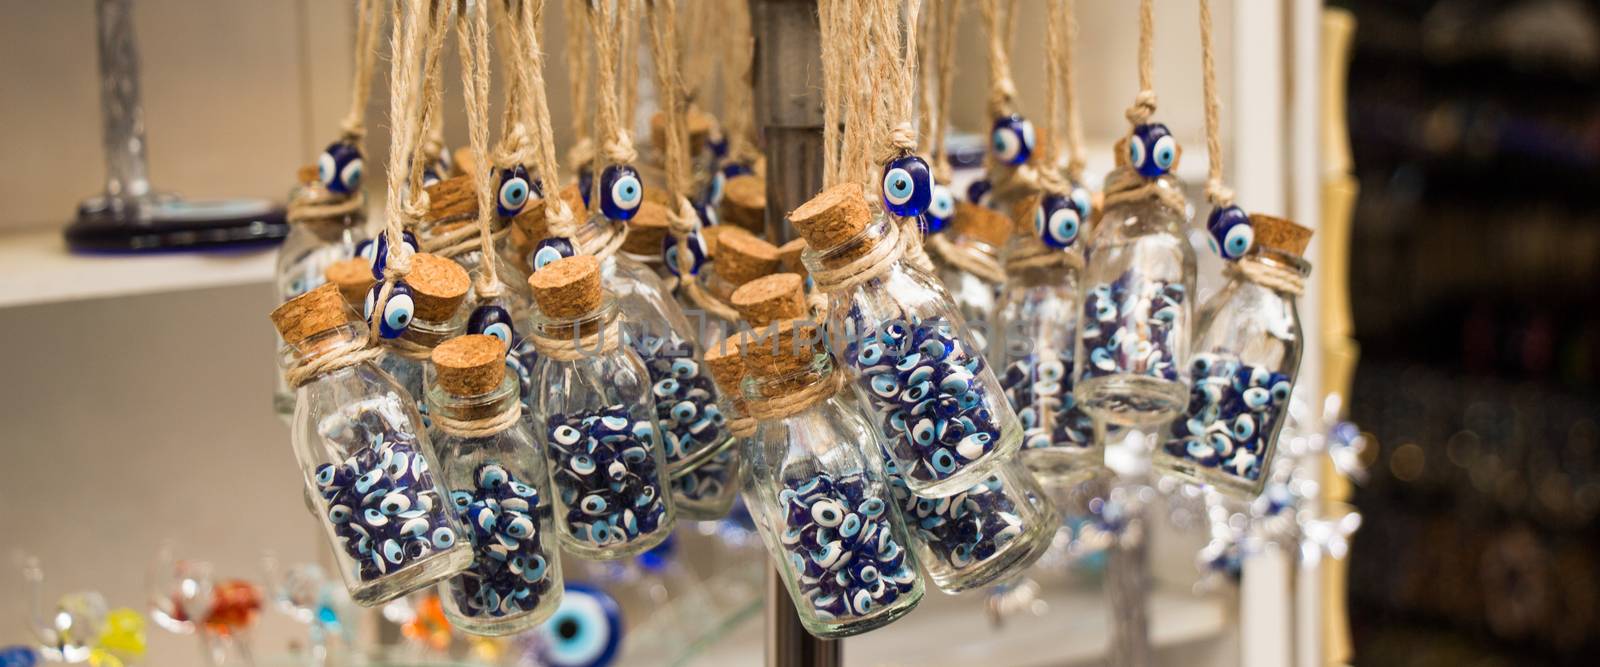 Little glass bottle filled with blue evil eye beads  by berkay